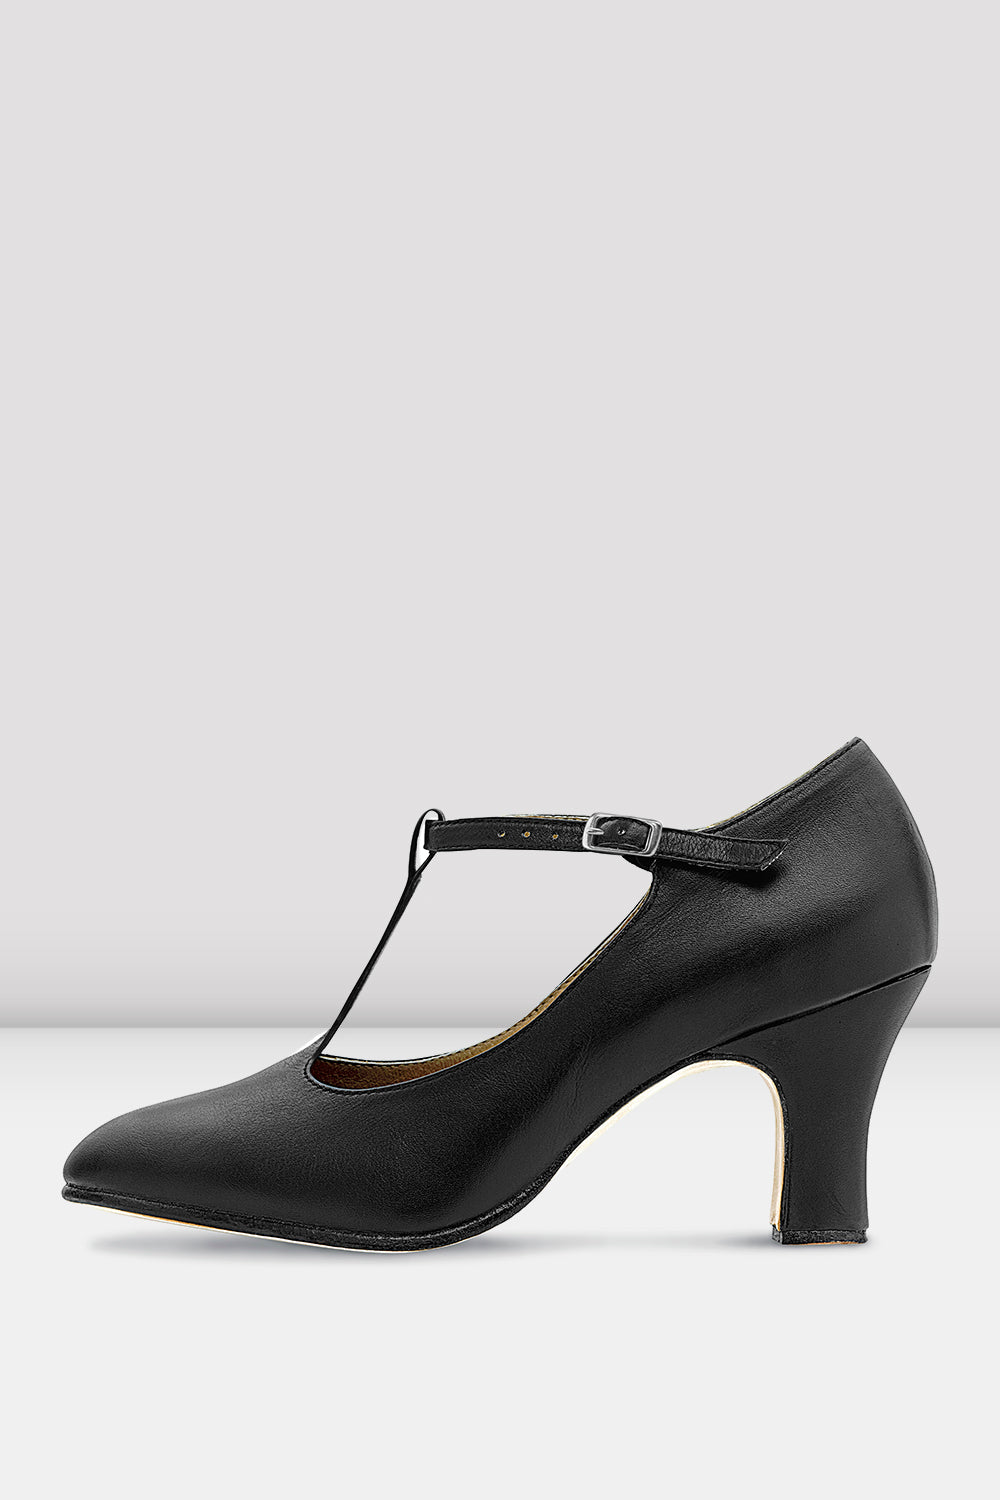 Stunning Ladies Satin Court Shoes Size UK 6 - Winter White - 3 Inch Heels |  eBay